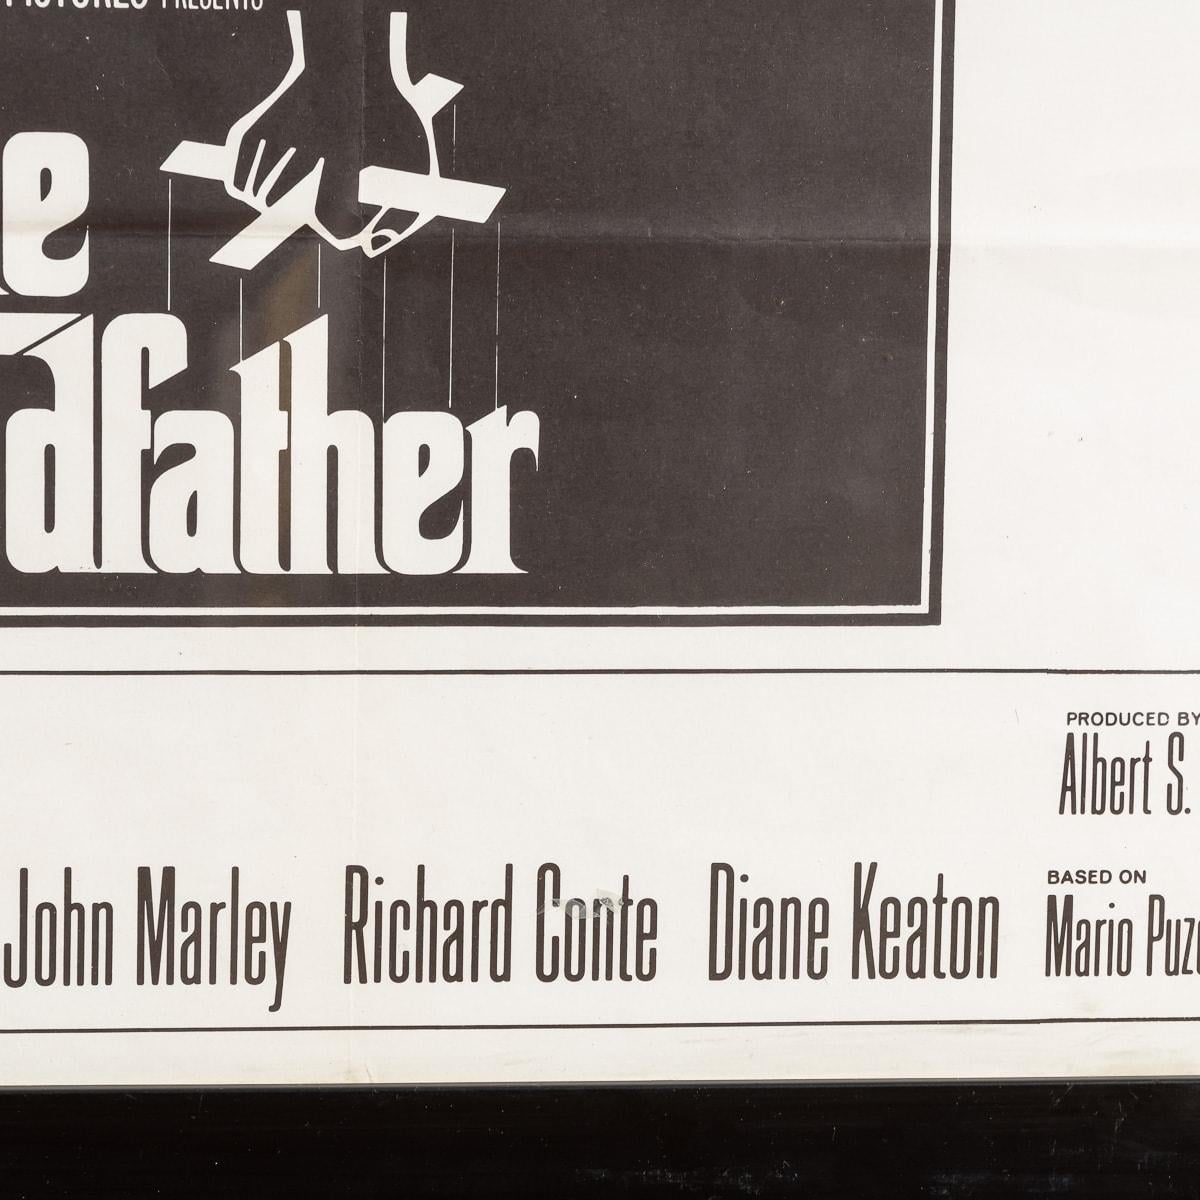 American A Framed Original Godfather Movie Poster, c.1972 For Sale